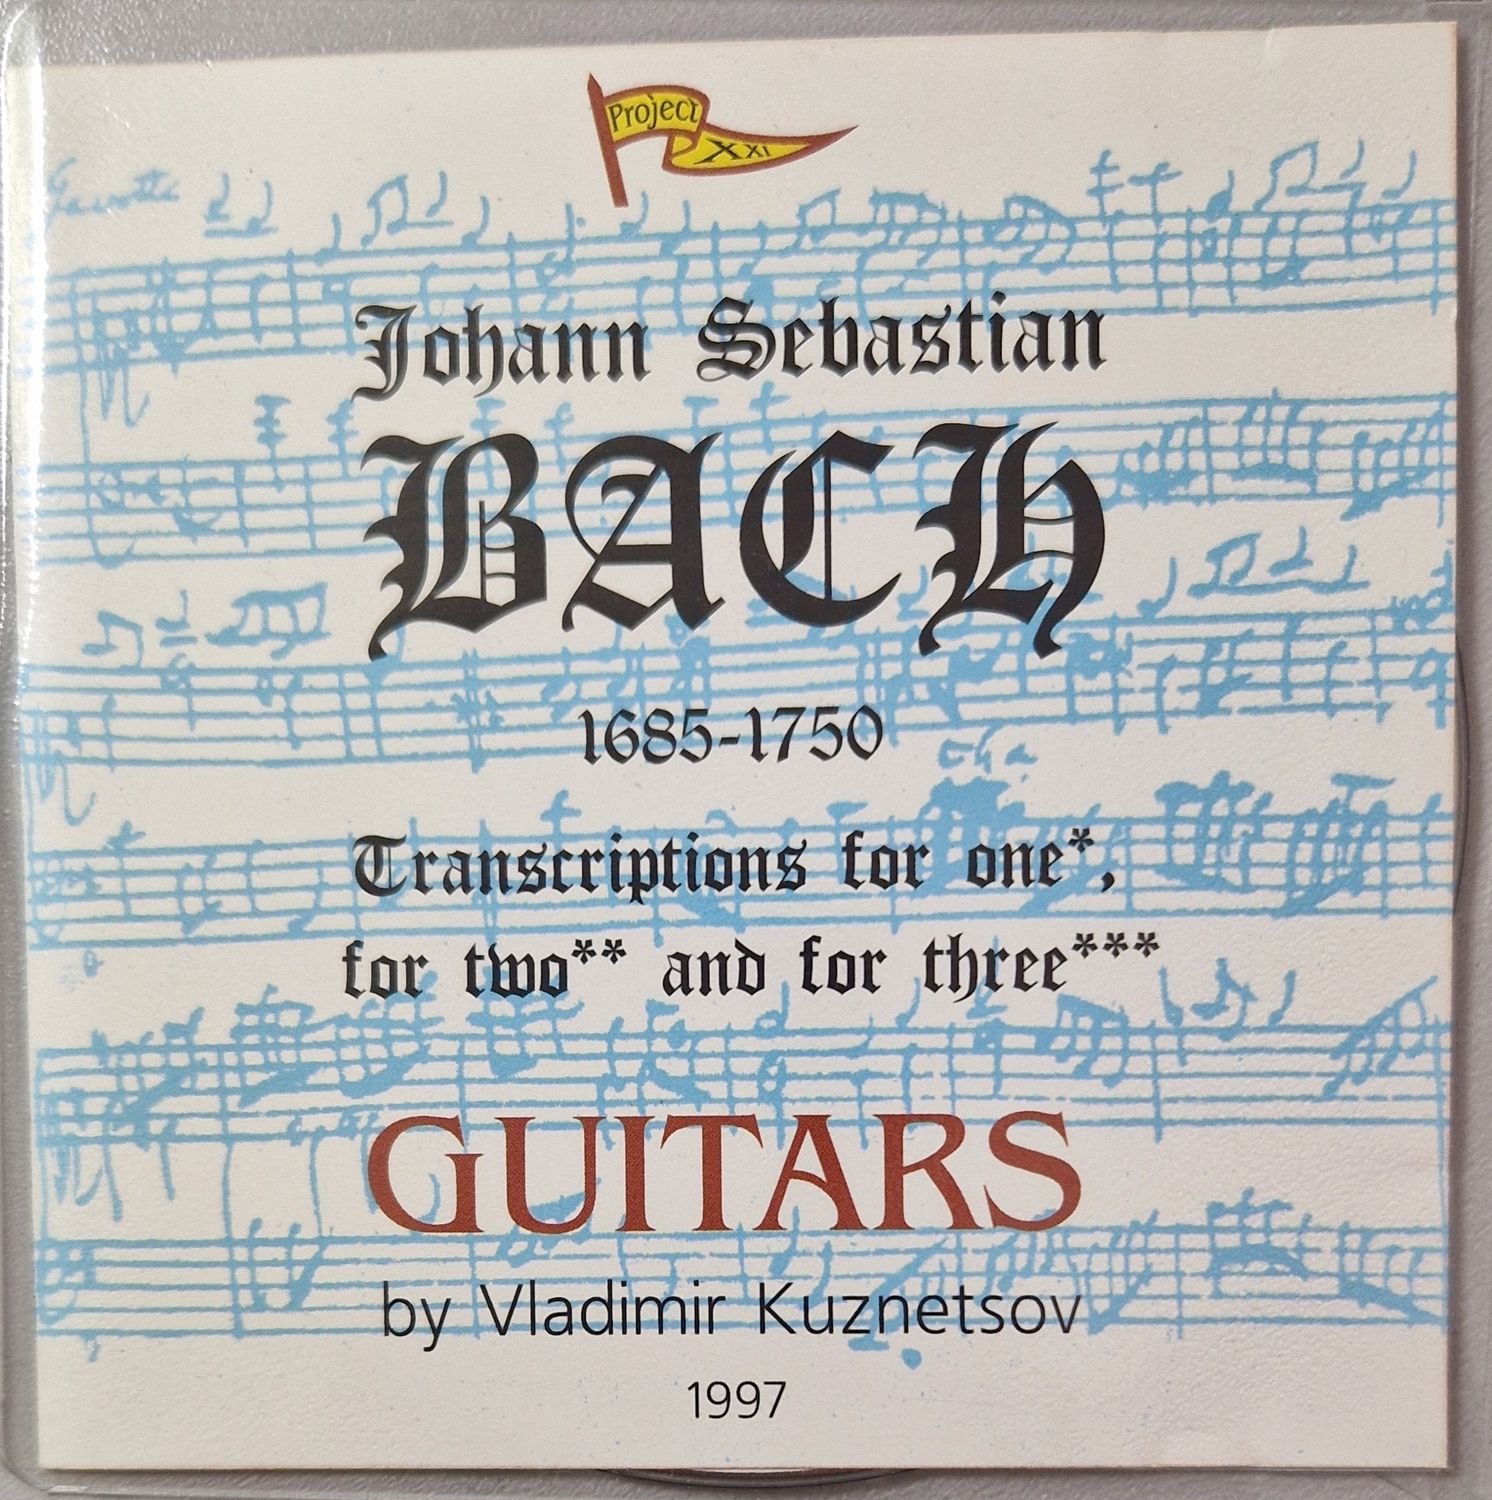 CD: Владимир Кузнецов — «Guitars» (1997)